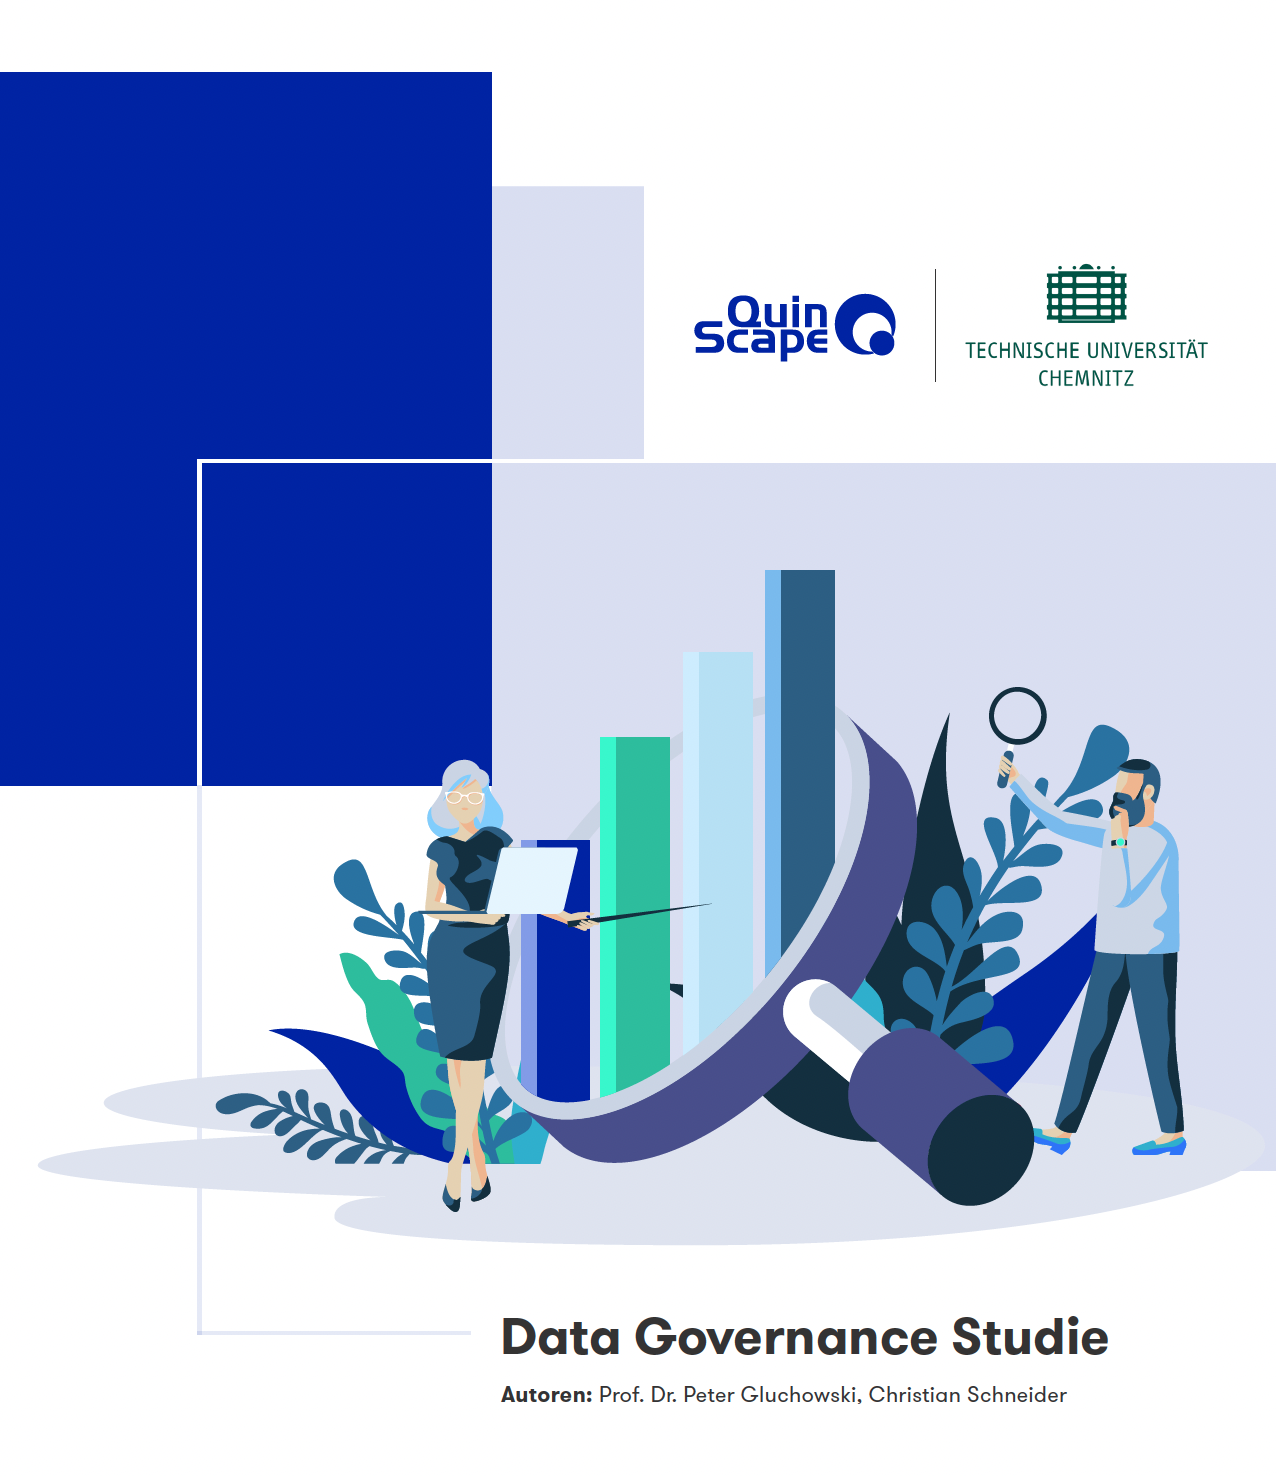 NL-Data-Governance-Studie-quinscape-gluchowski